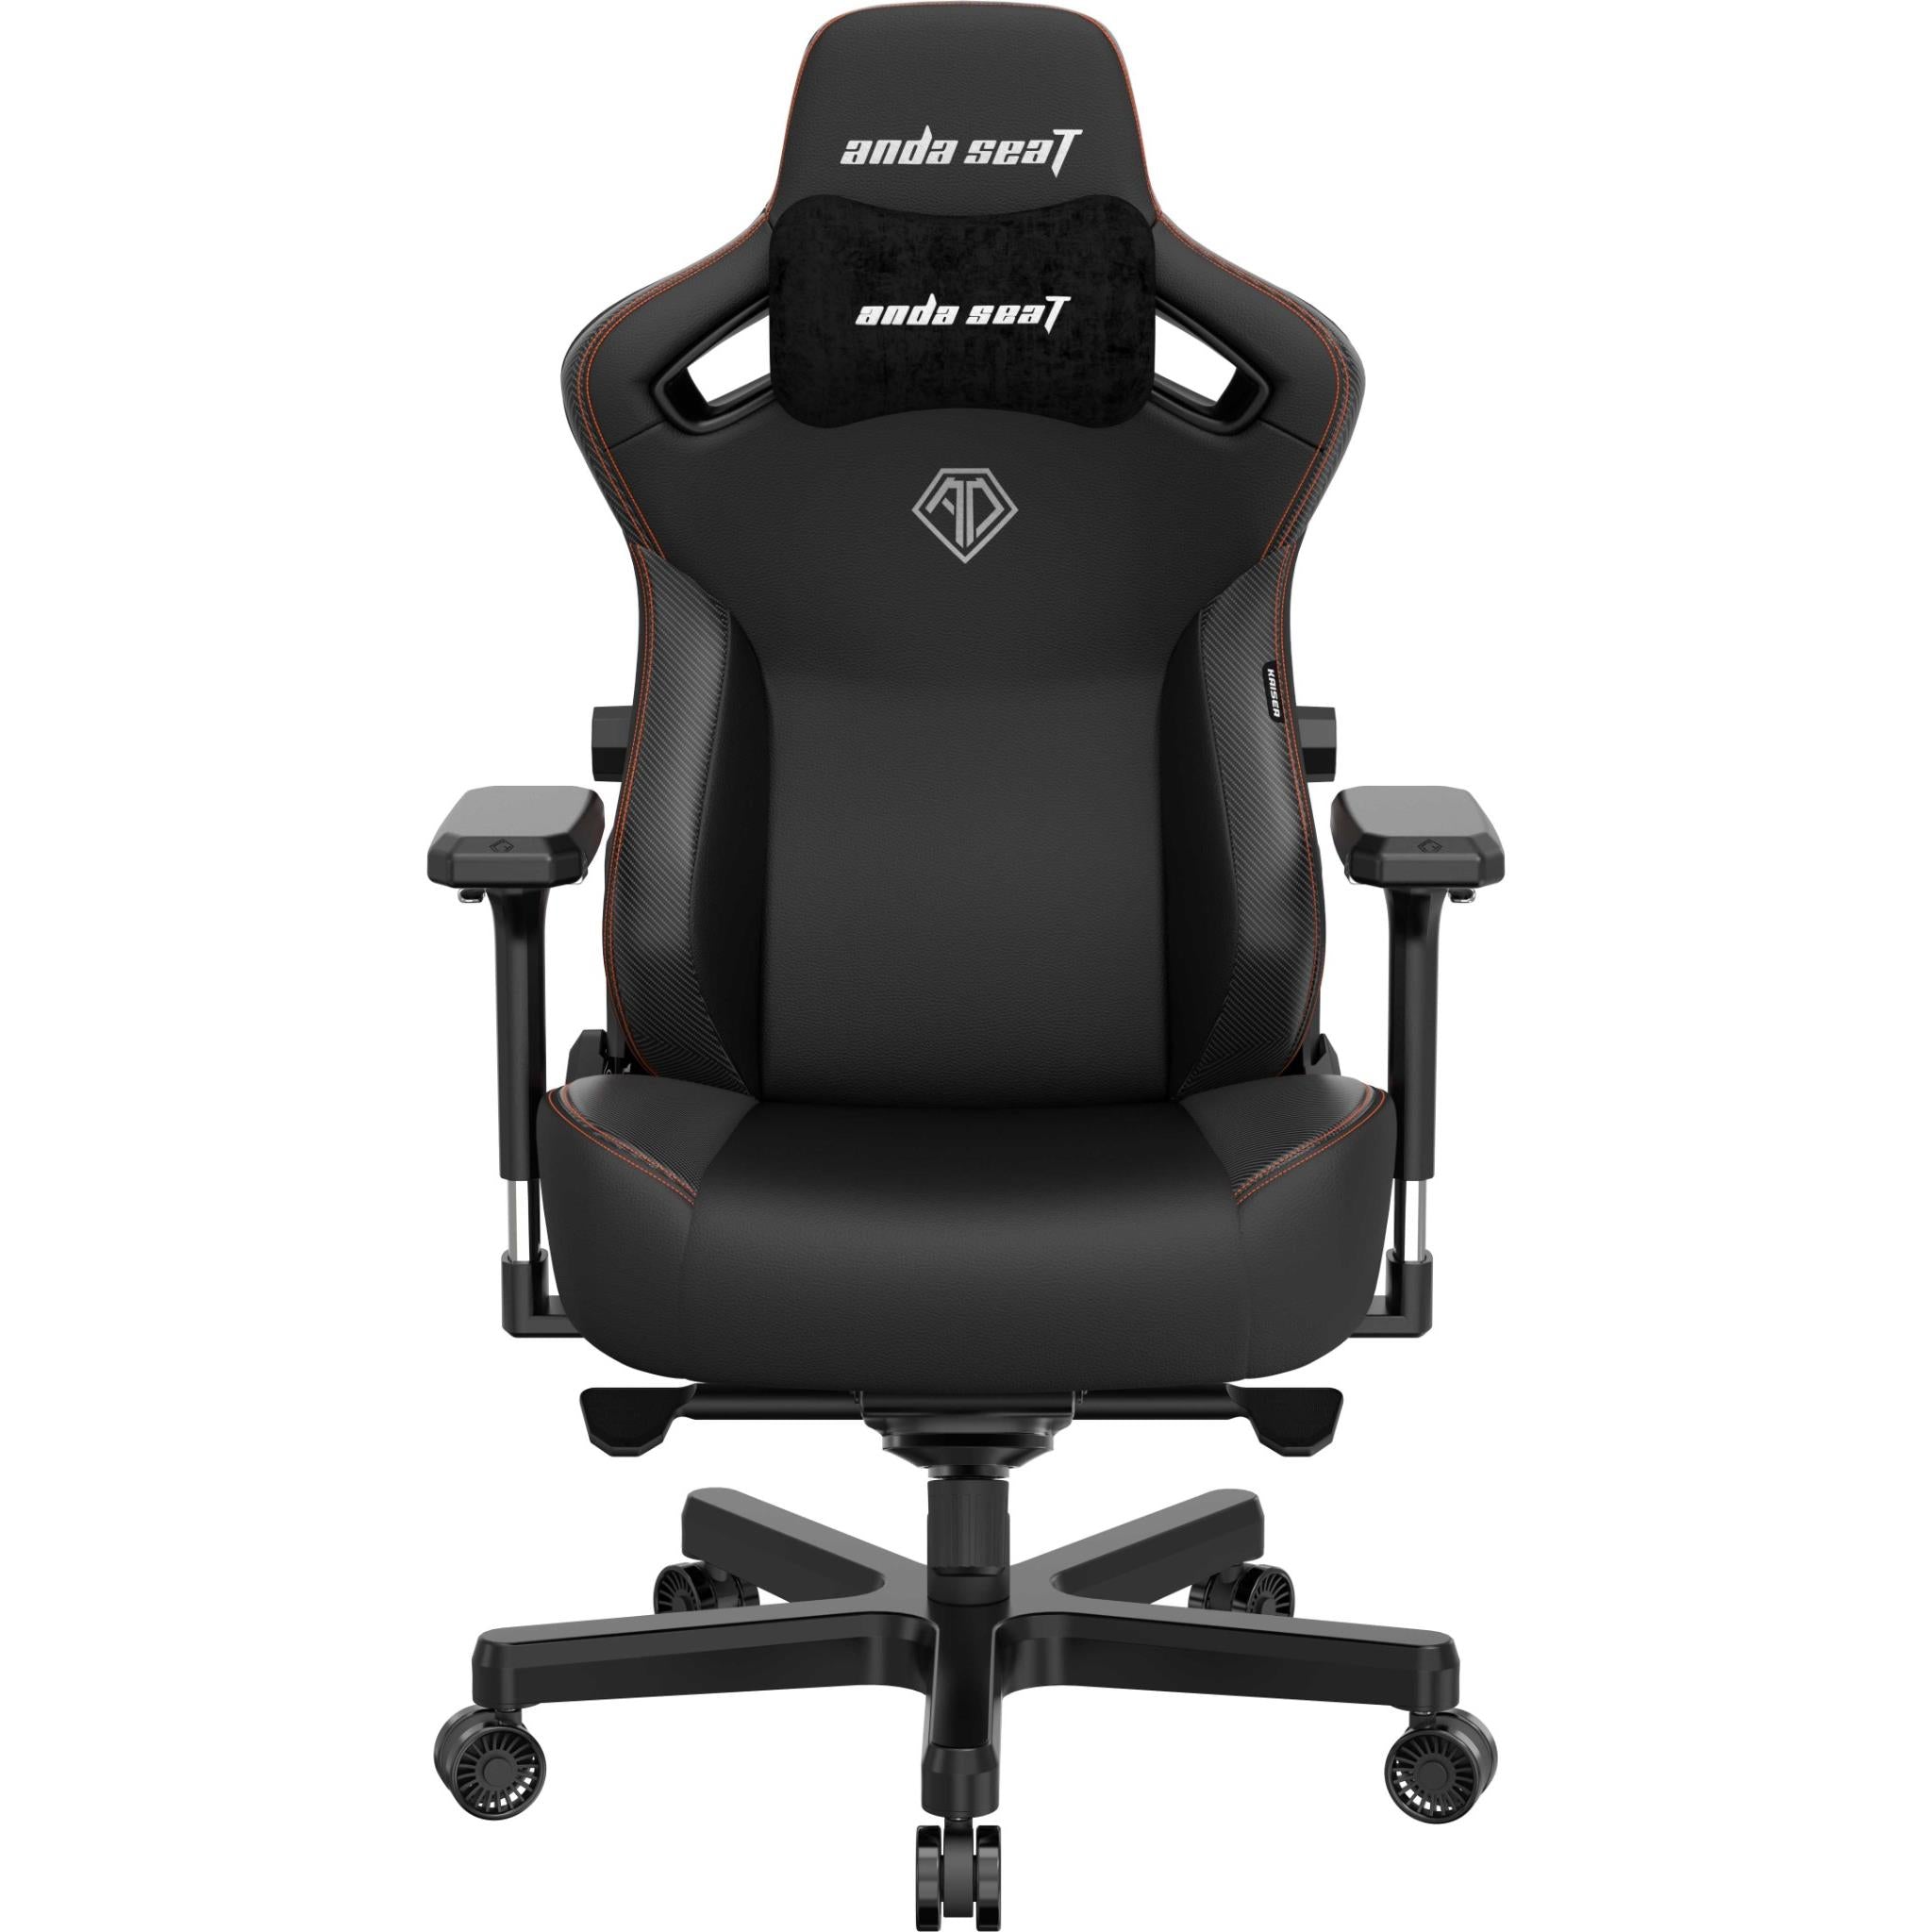 anda seat kaiser 3 series premium gaming chair black (xl)